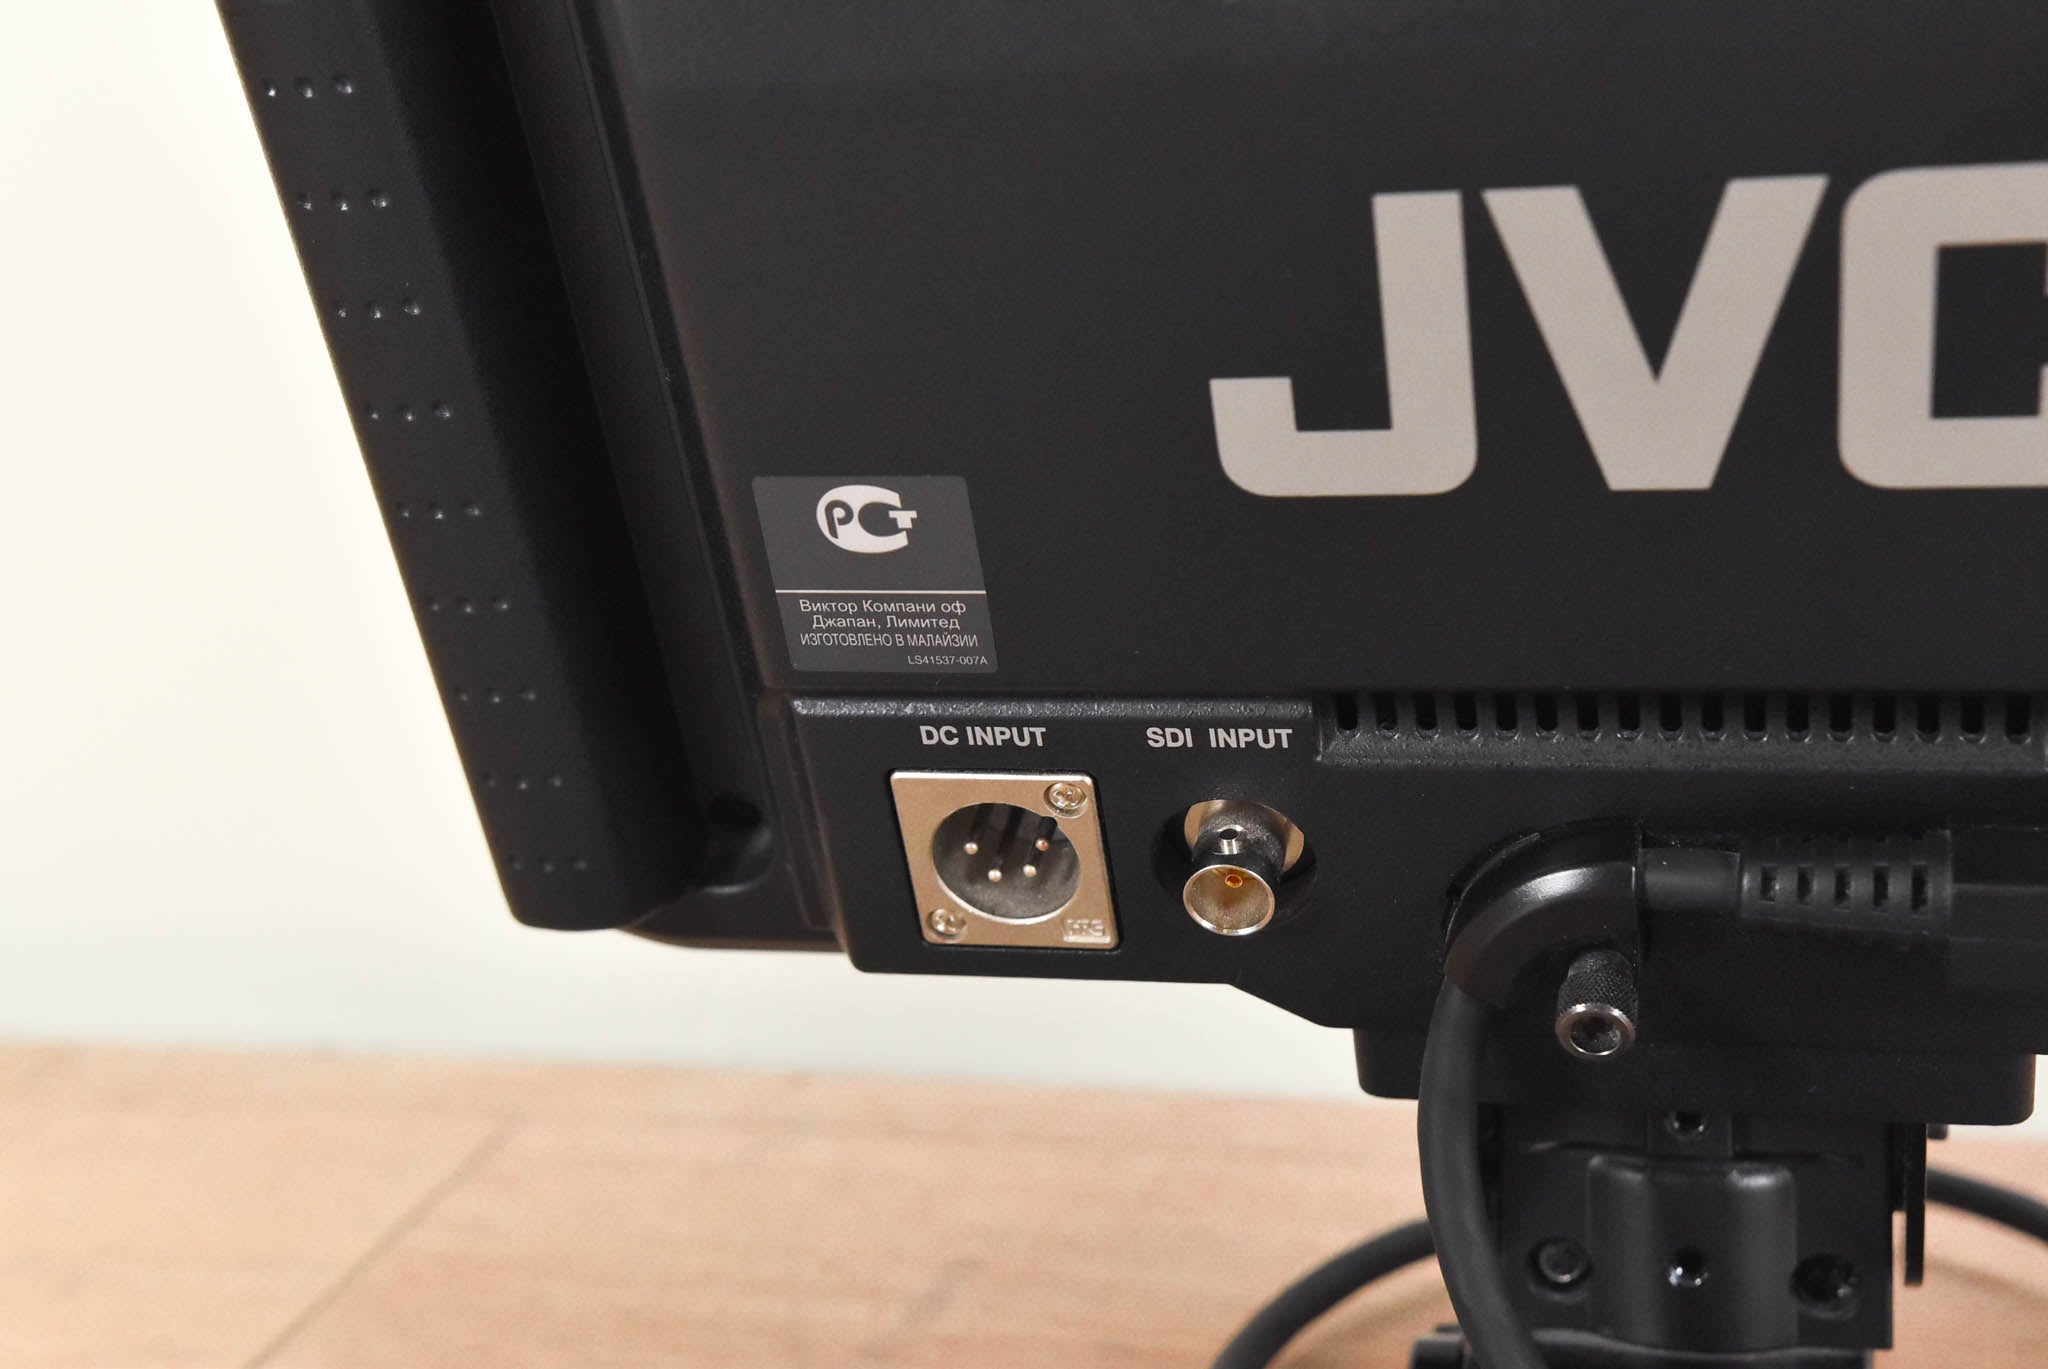 JVC VF-HP790G 8.4-in HD/SD Studio Viewfinder